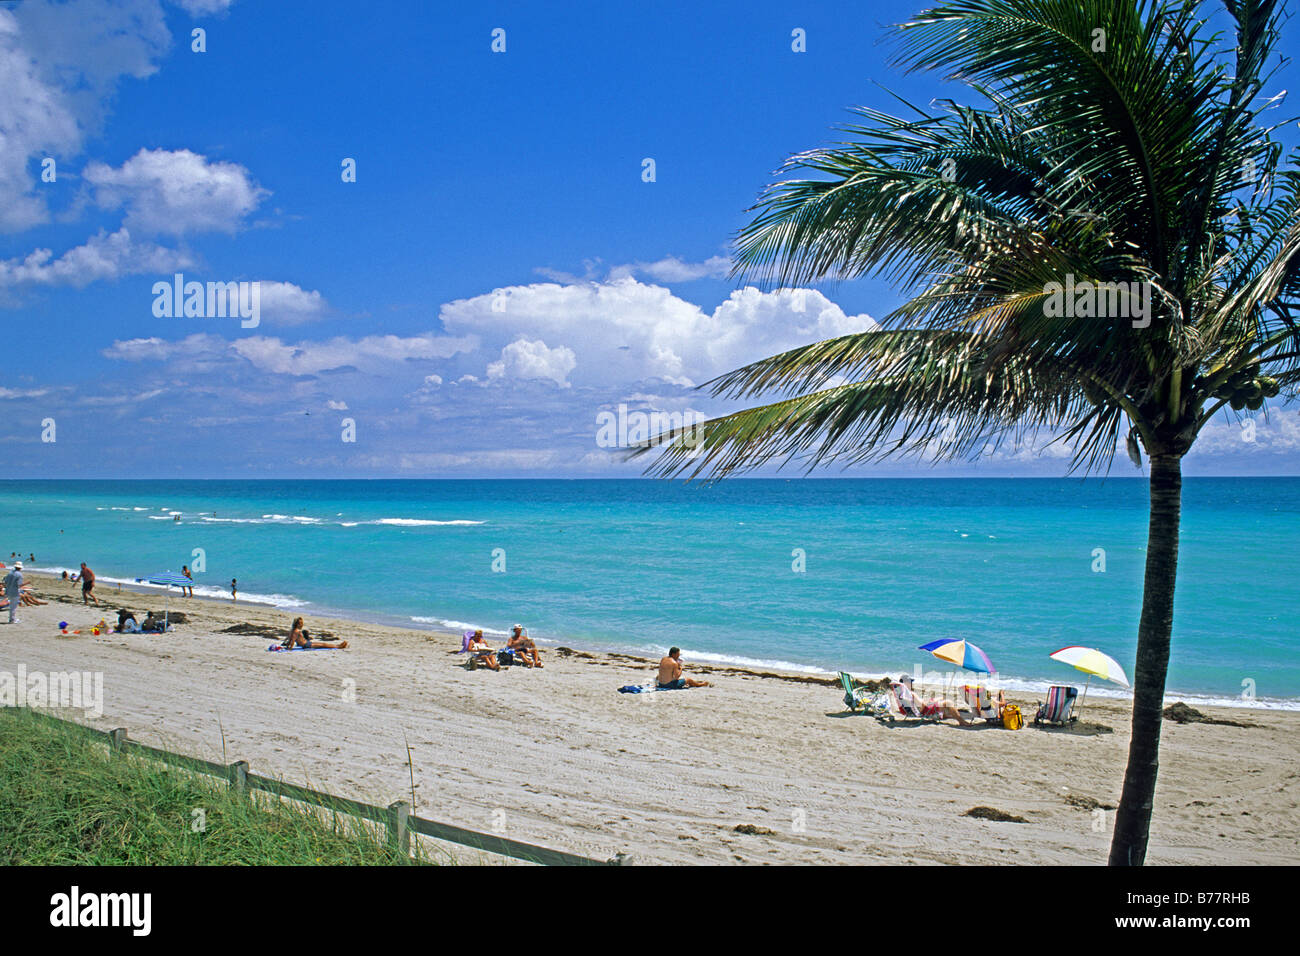 People on beach with palm tree,Dania Beach,Florida Stock Photo